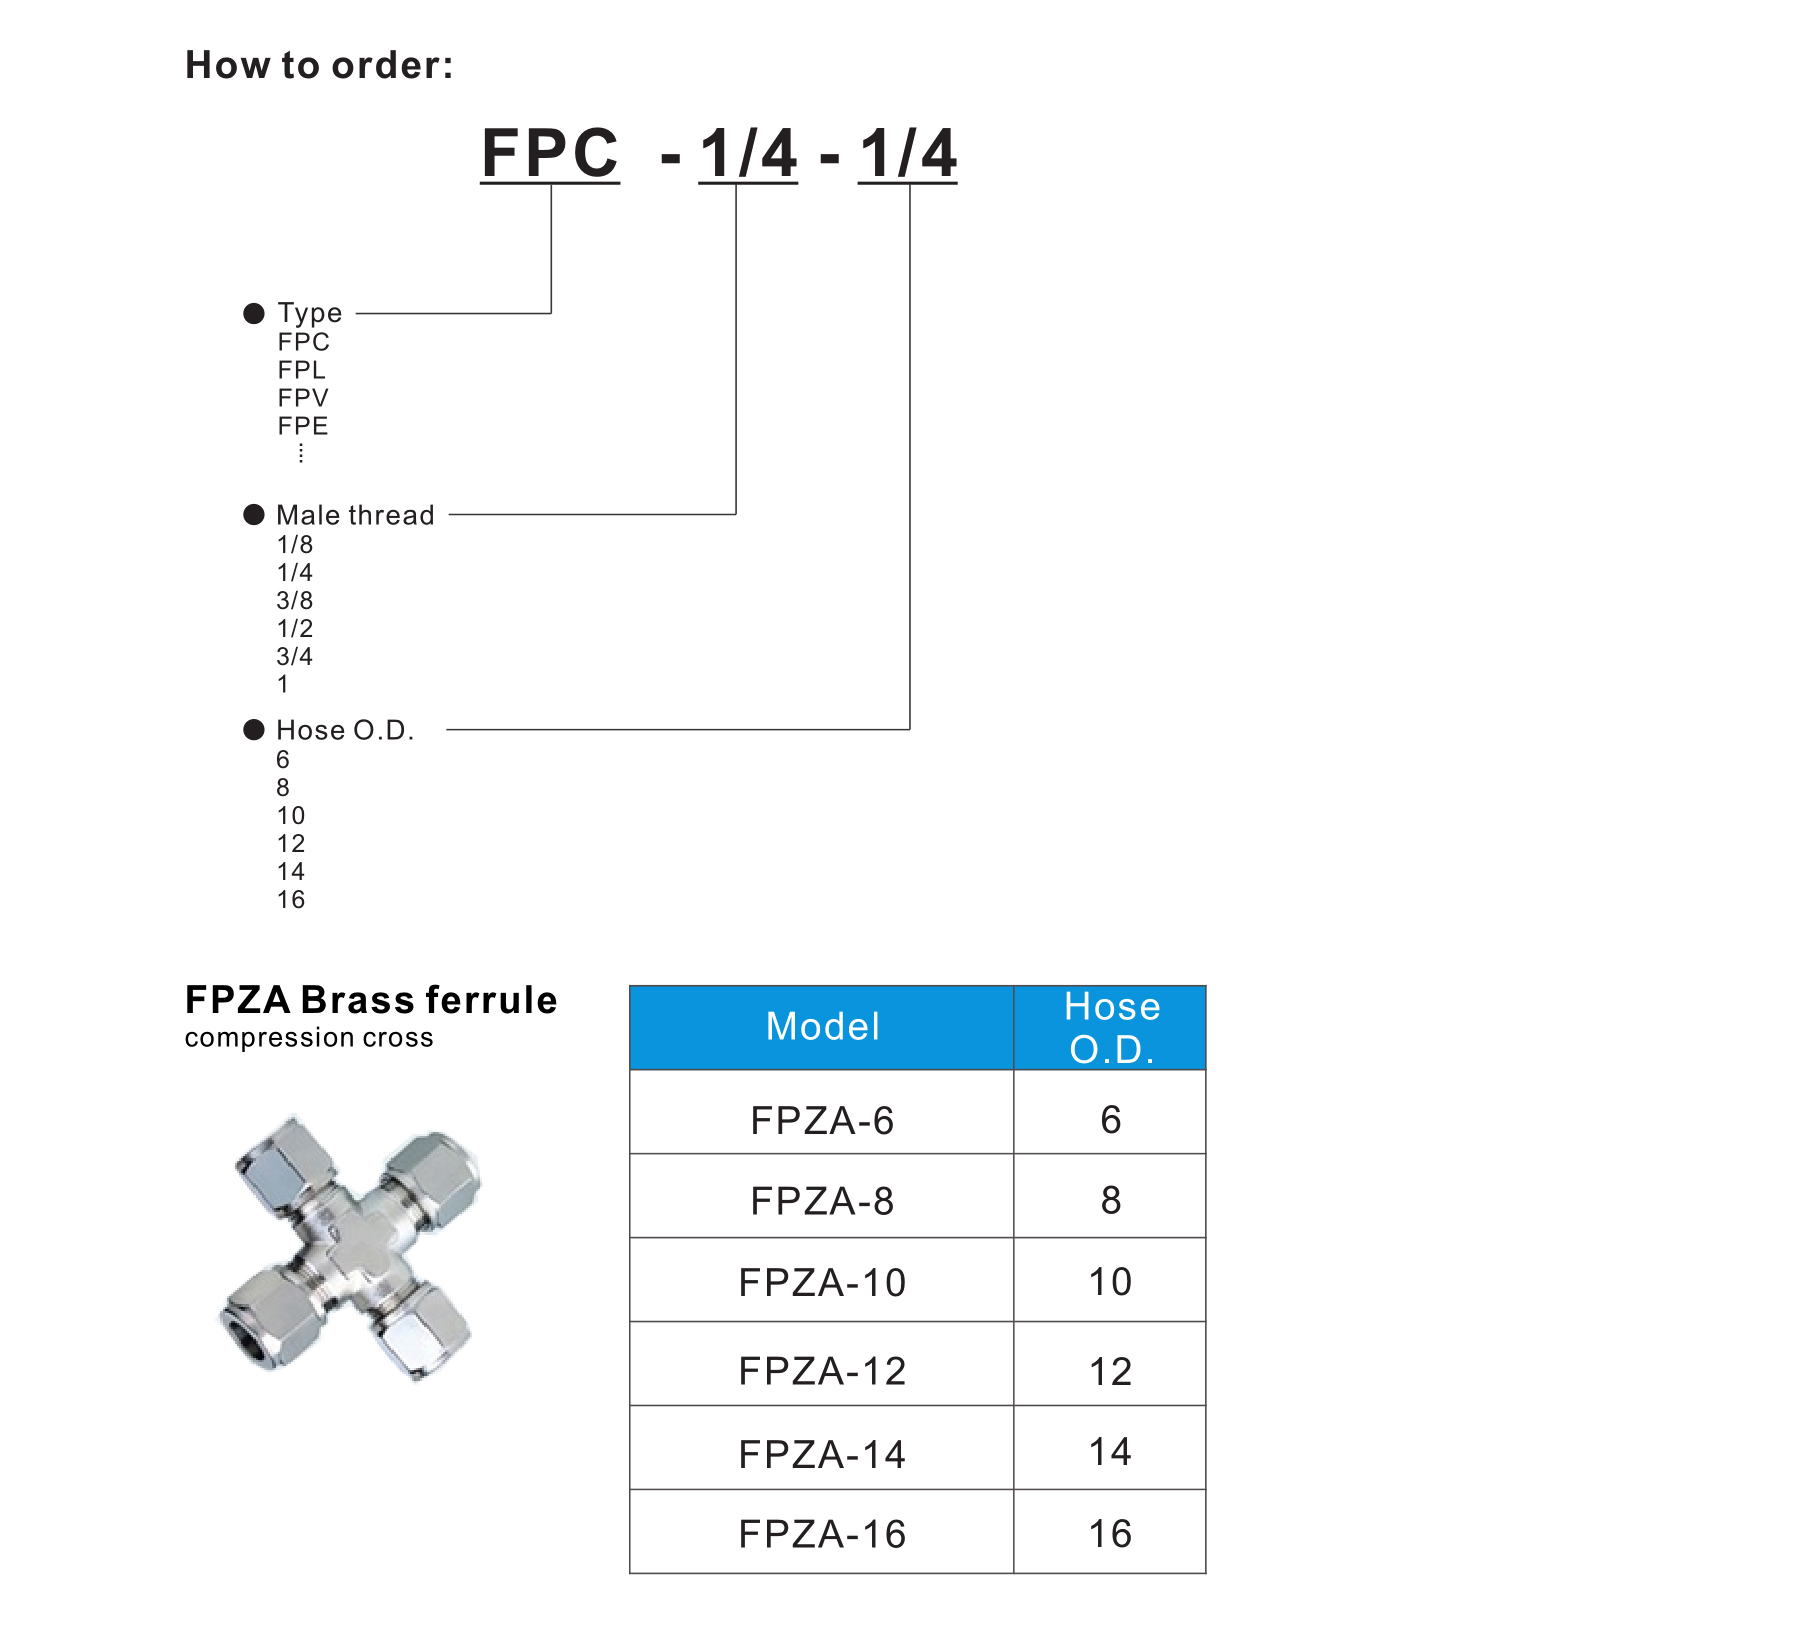 FPZA Brass ferrule compression cross